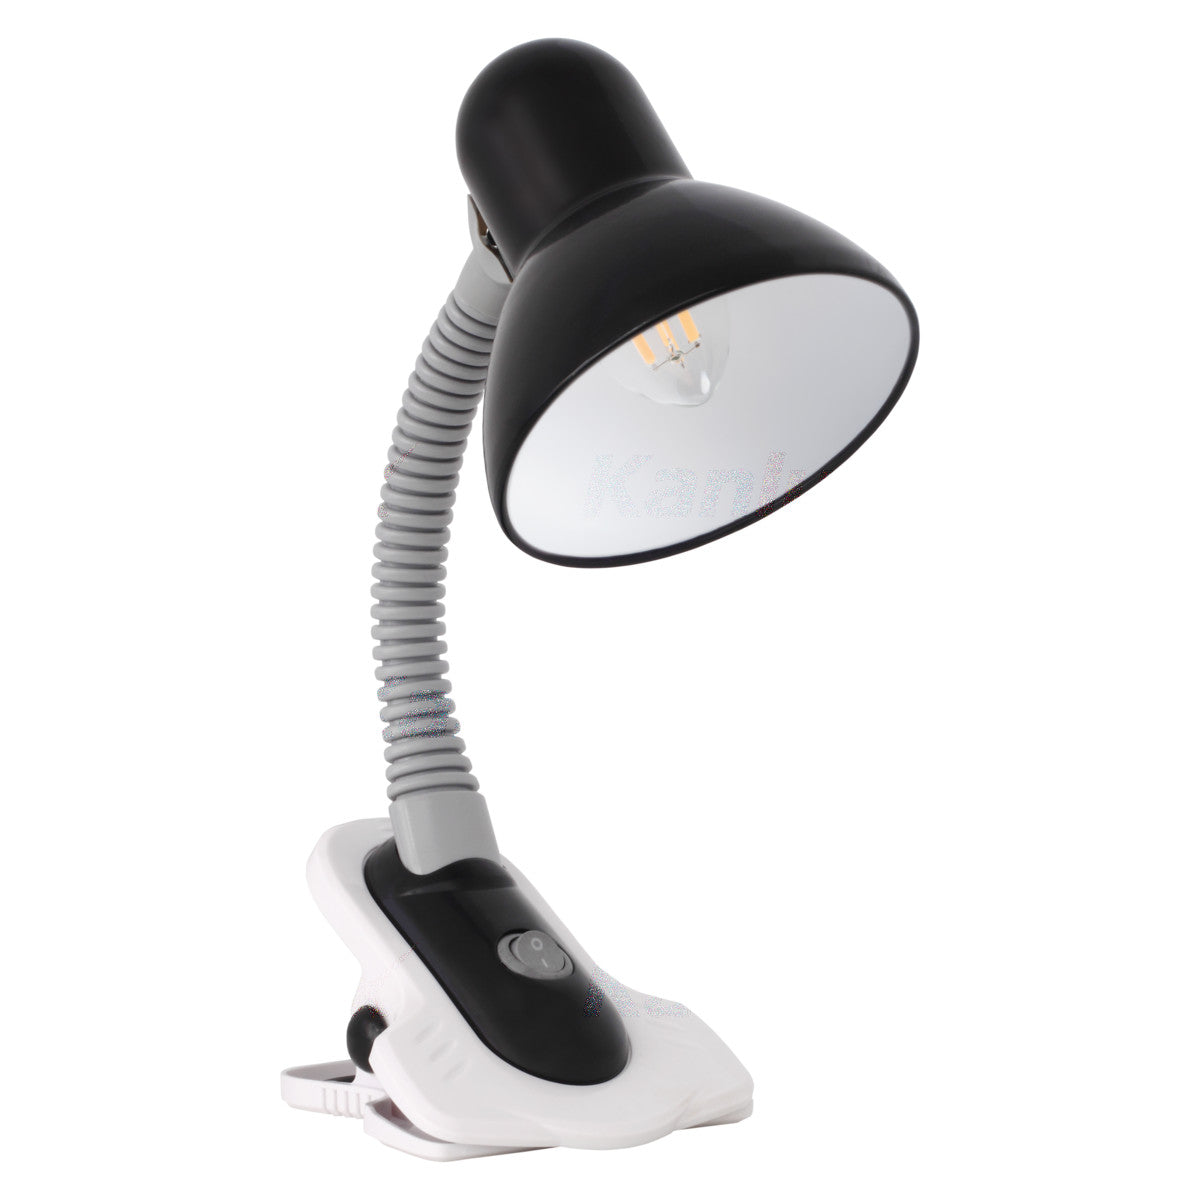 Kanlux SUZI Desk Study Adjustable E27 LED Switch Reading Table Clip Clamp Lamp Light